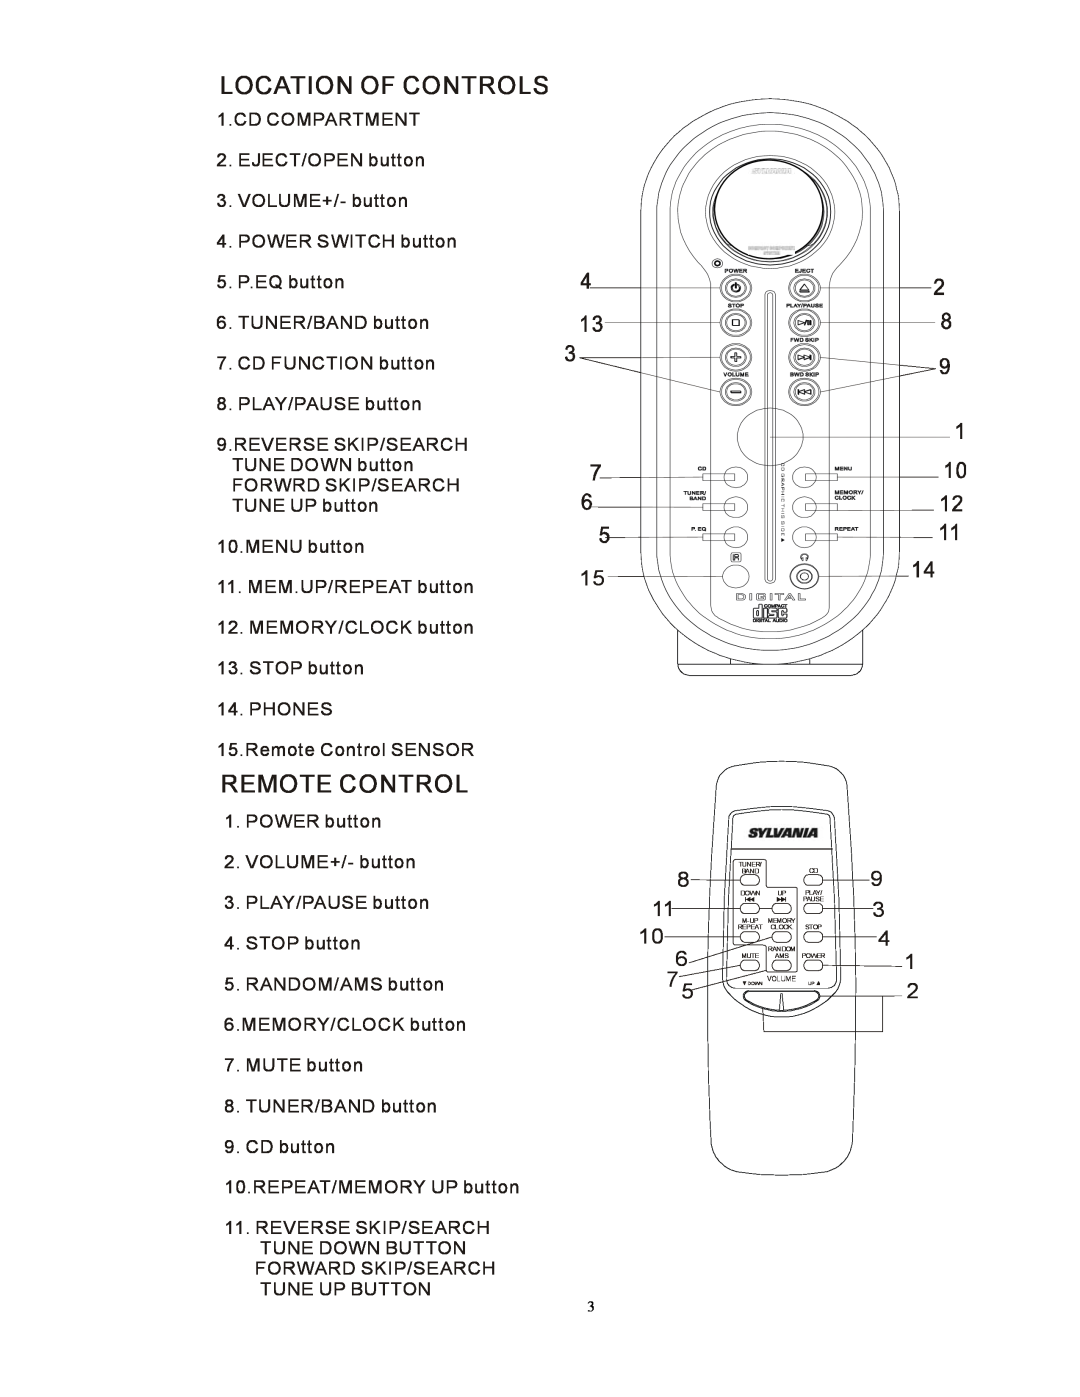 Sylvania SRCD909 instruction manual Location Of Controls, Remote Control, 8 11, 9 3 4 